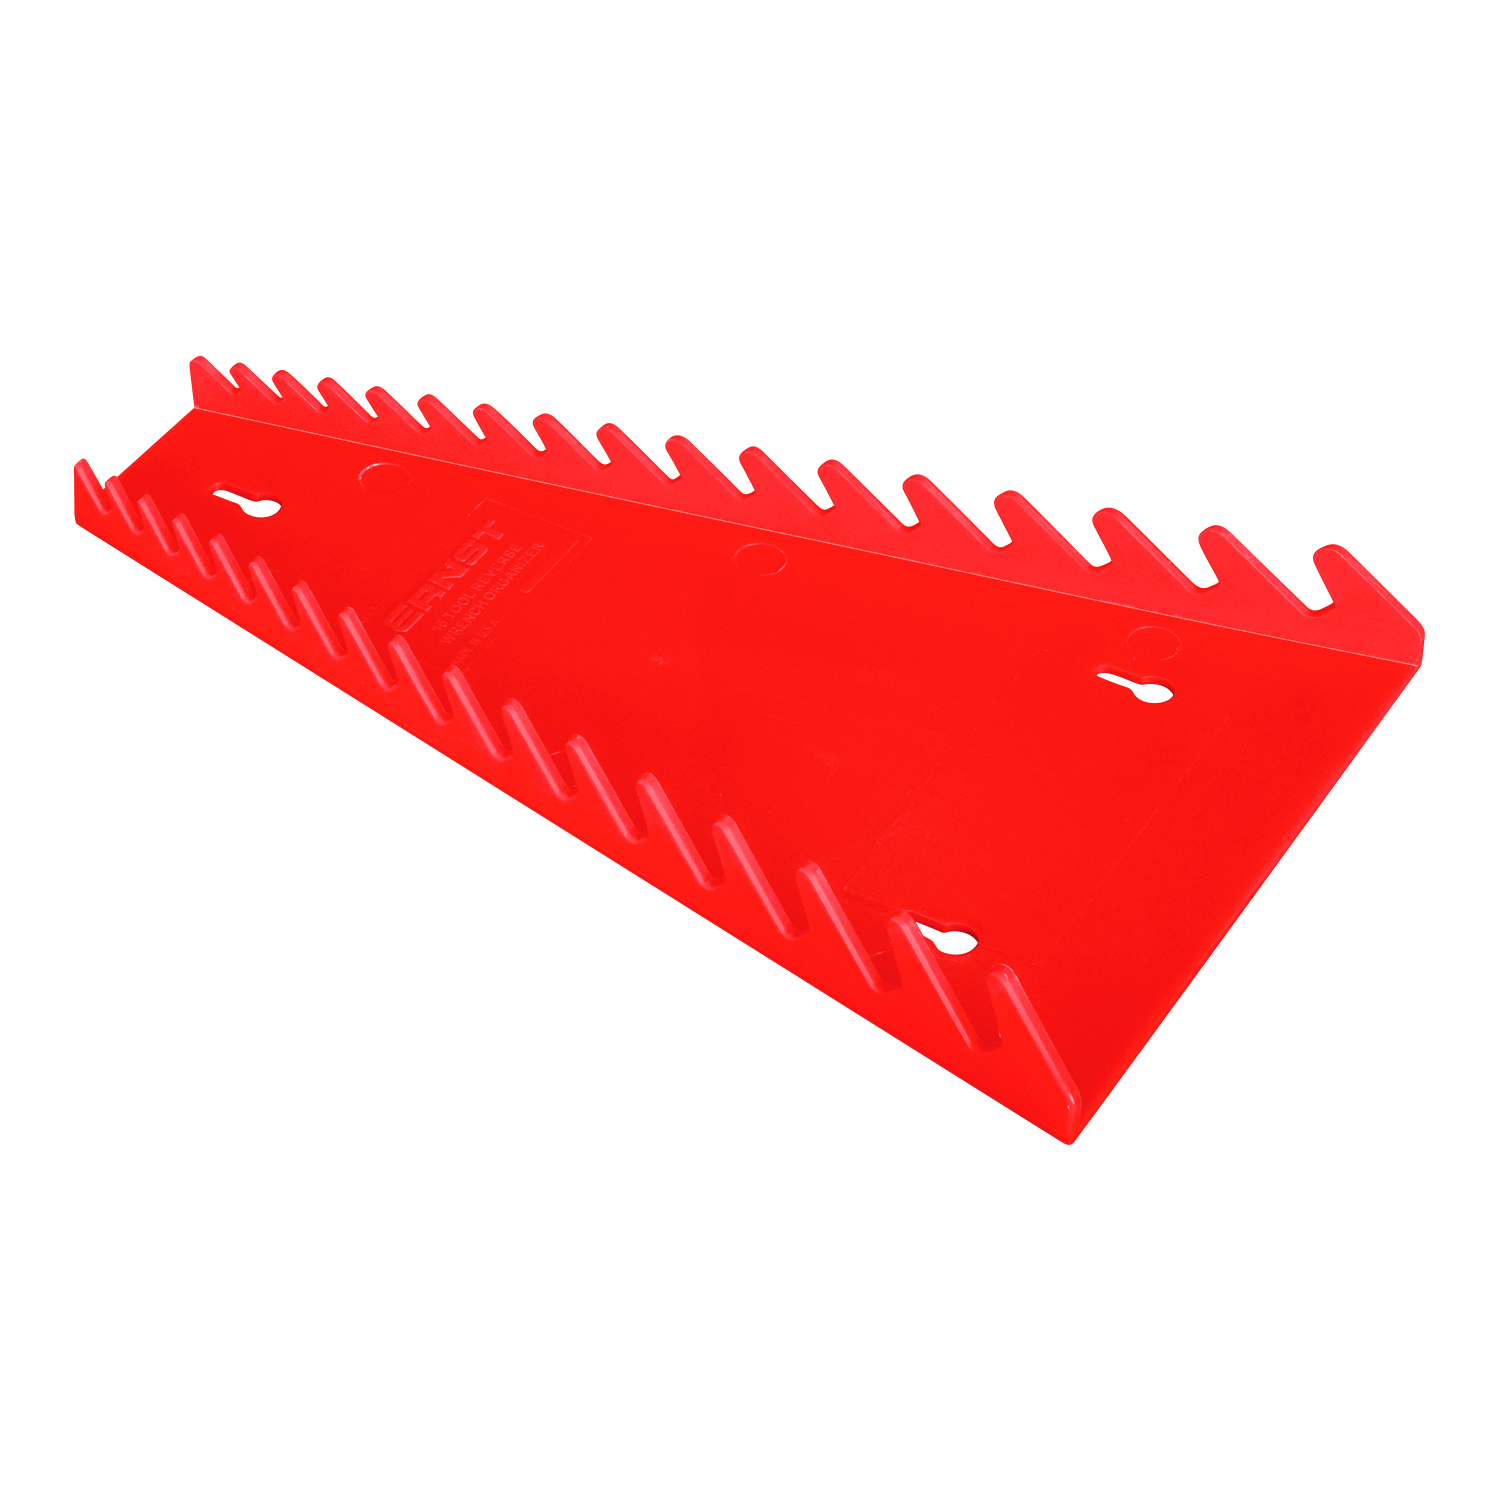 Ernst Manufacturing 5066 Standard 15 tool Wrench Organizer Red 